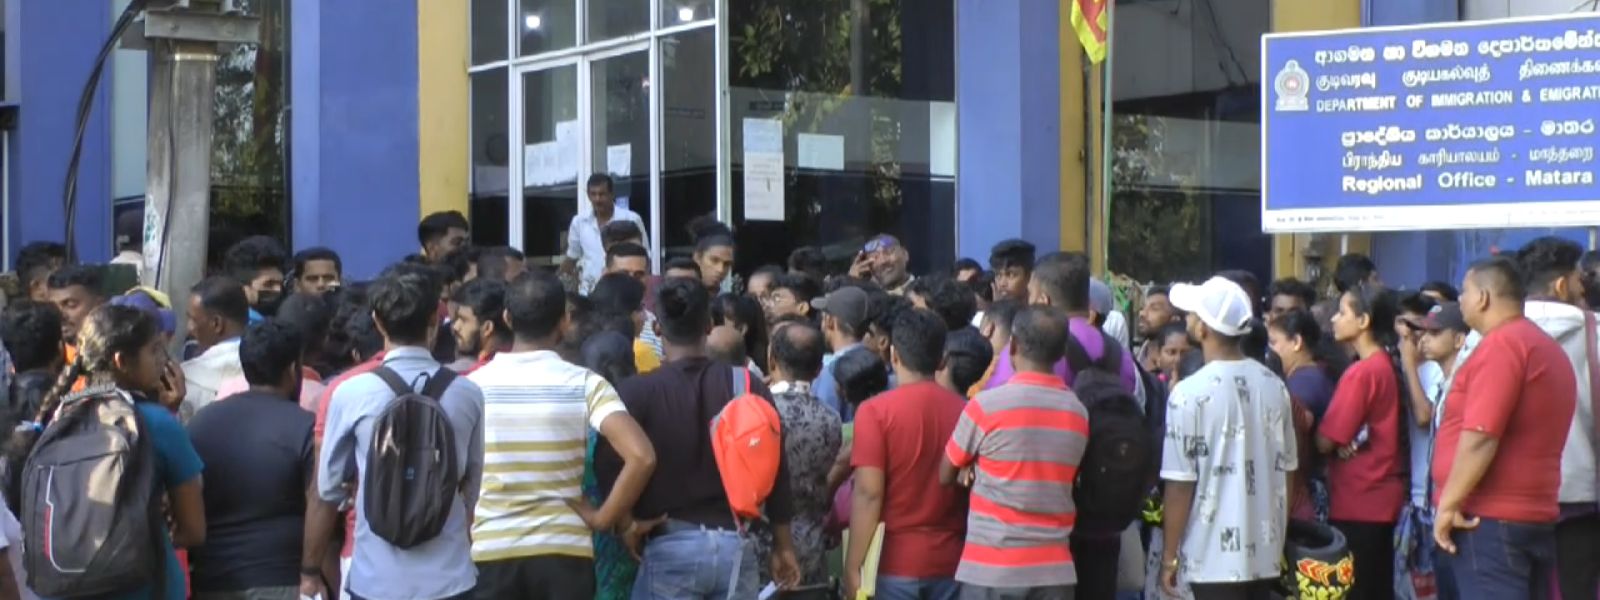 Tense situation at Matara Immigration office